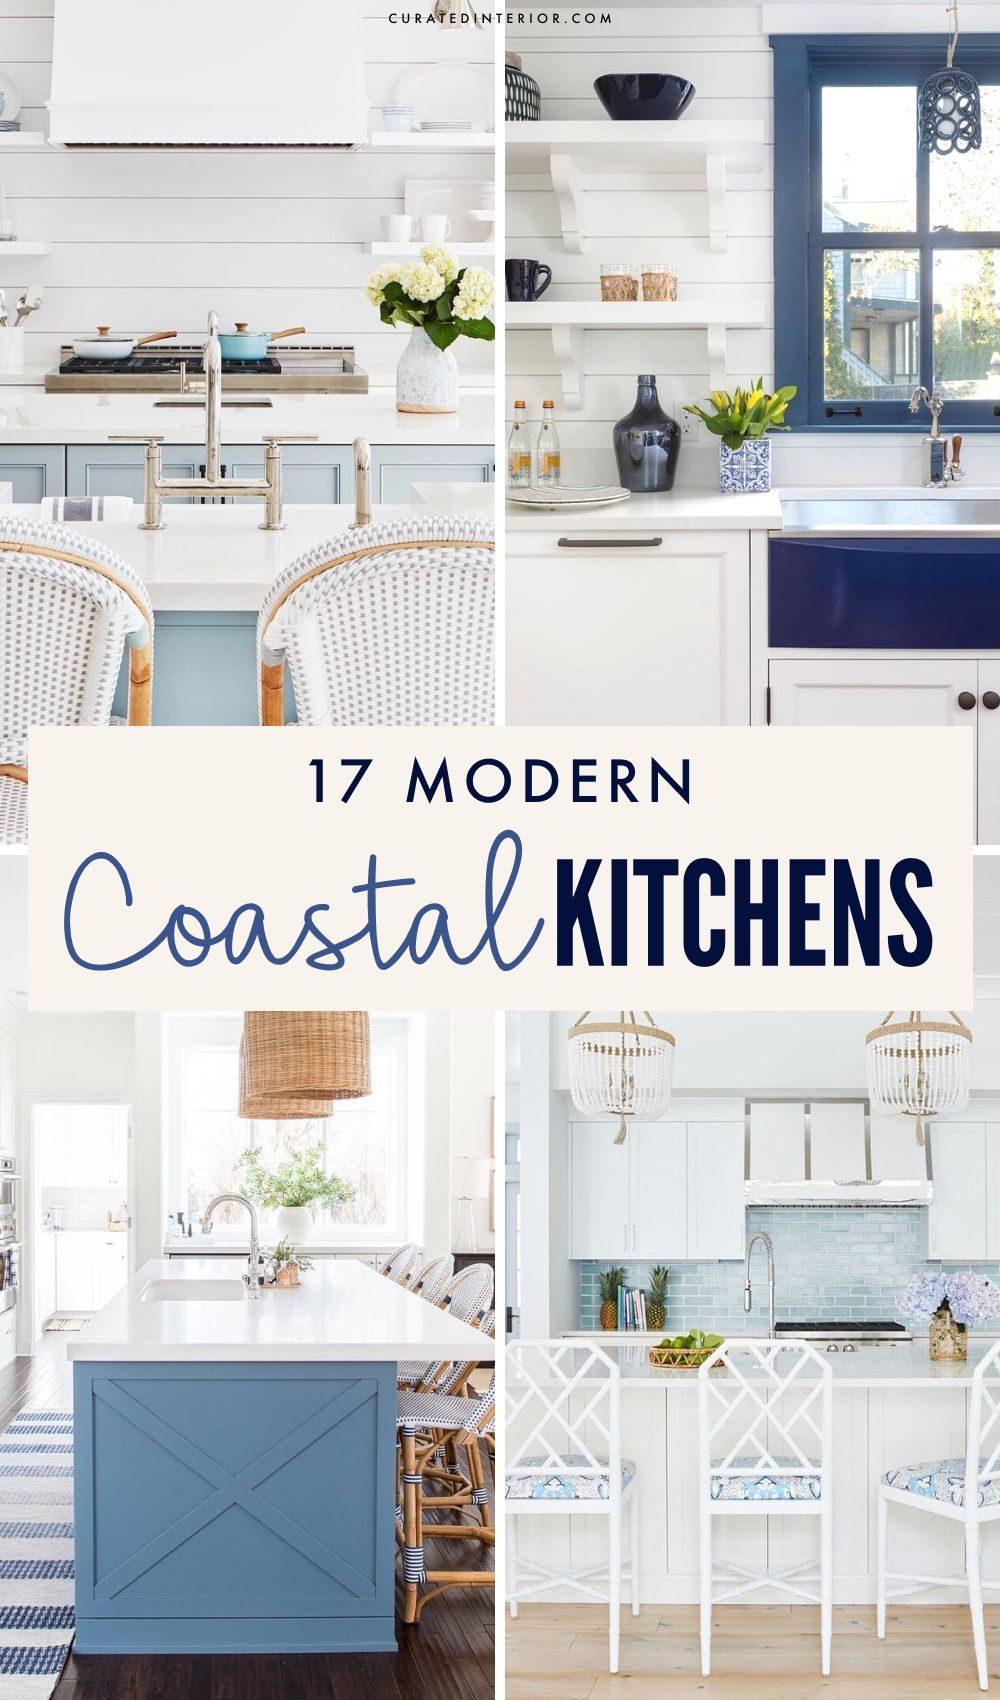 18 Coastal Kitchen Decor Ideas for a Beach Home